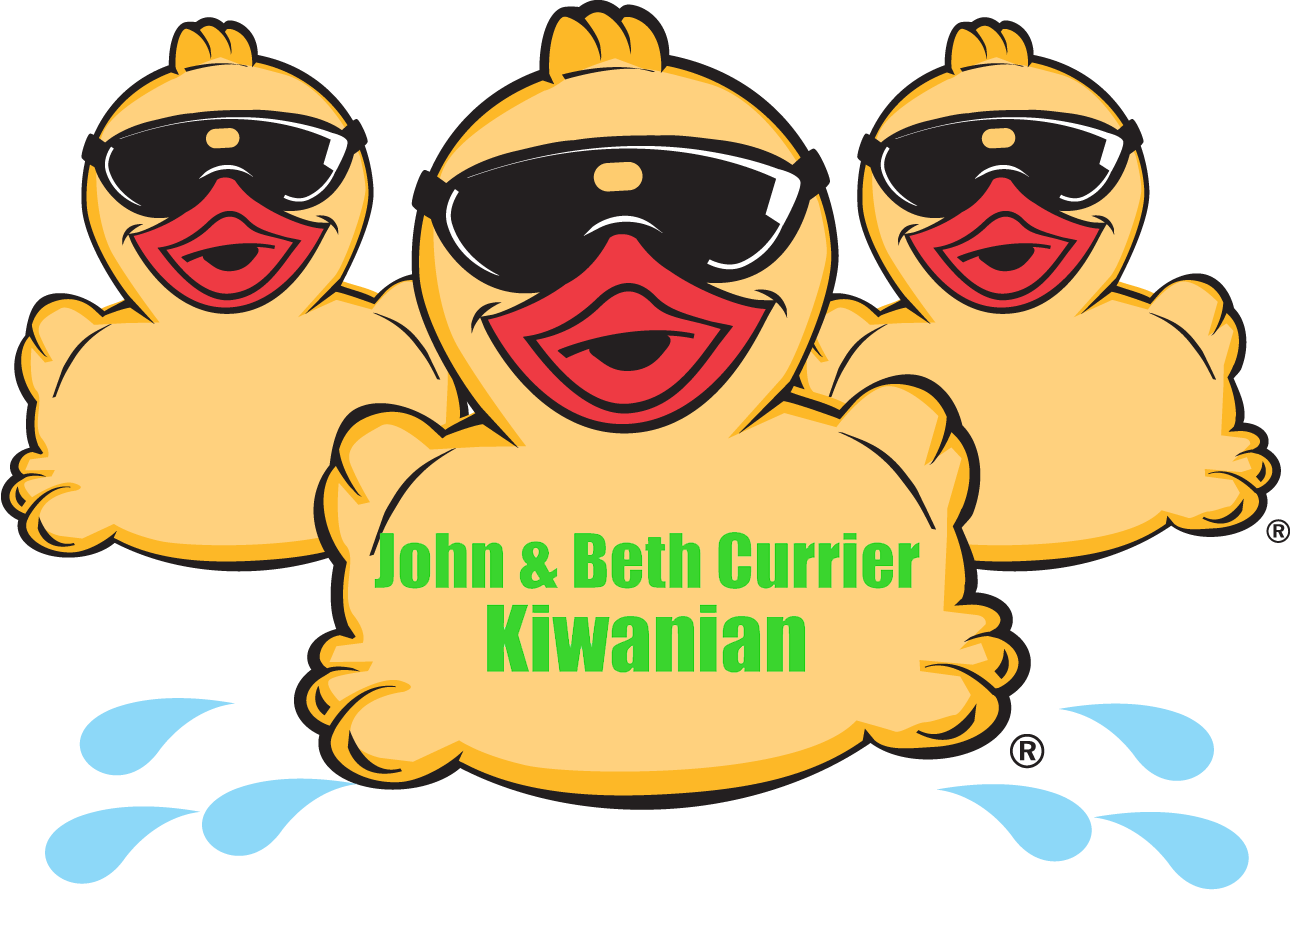 John & Beth Currier